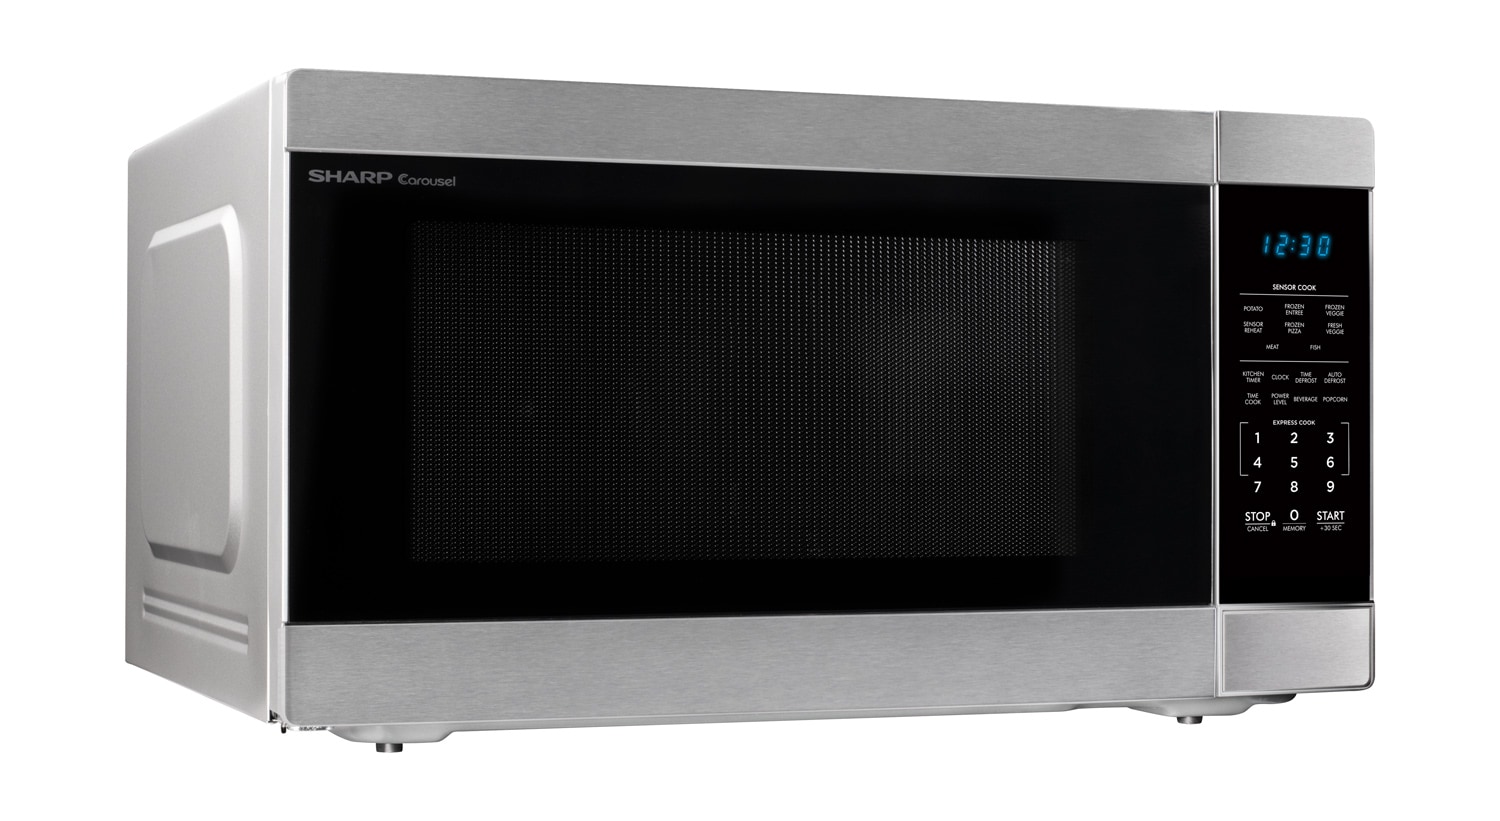 GE 2-cu ft 1200-Watt Sensor Cooking Controls Countertop Microwave  (Stainless Steel) in the Countertop Microwaves department at